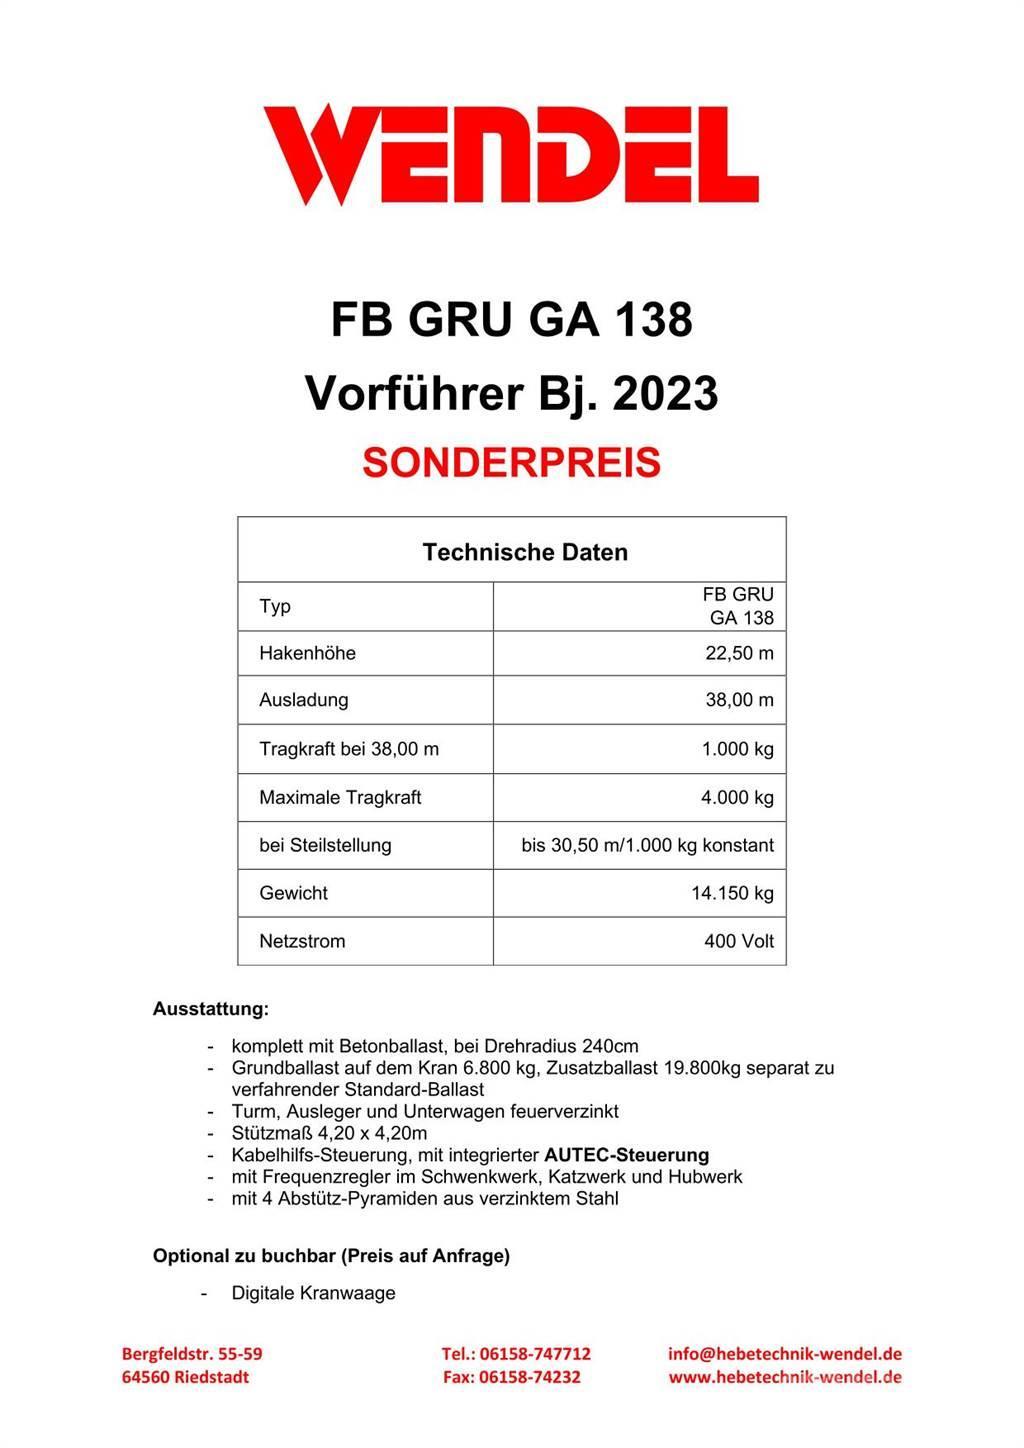 FB GRU Hochbaukran GA 138 Tower cranes